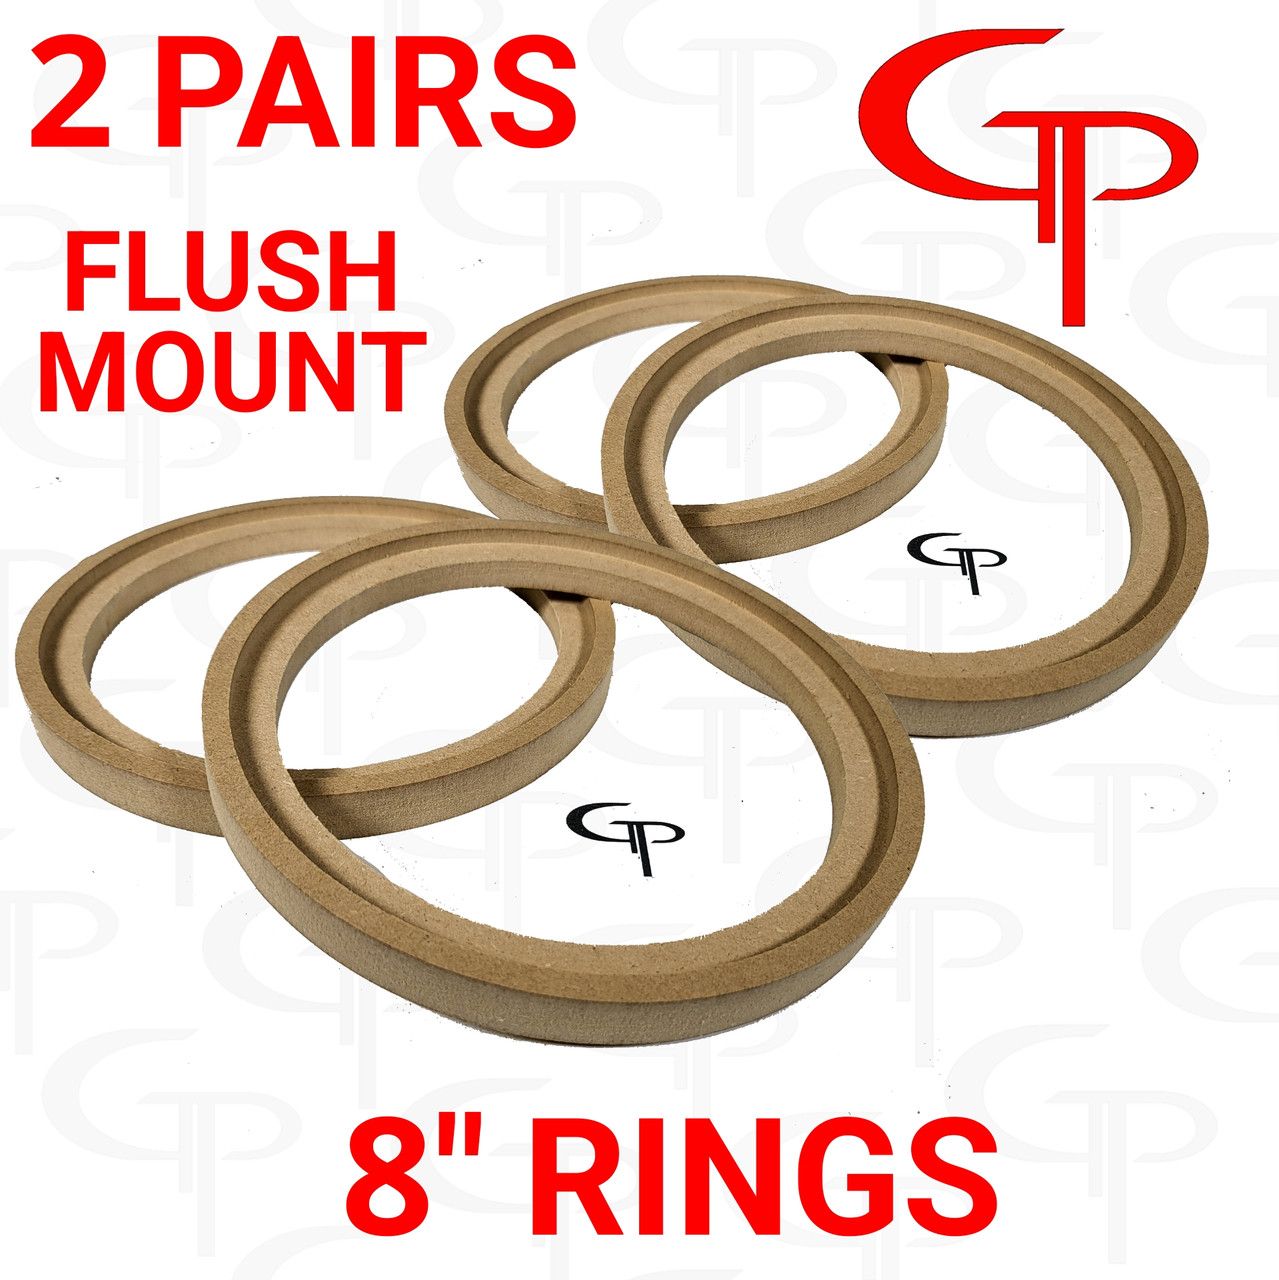 GP 8" Flush Mount Speaker Rings 2 Pairs